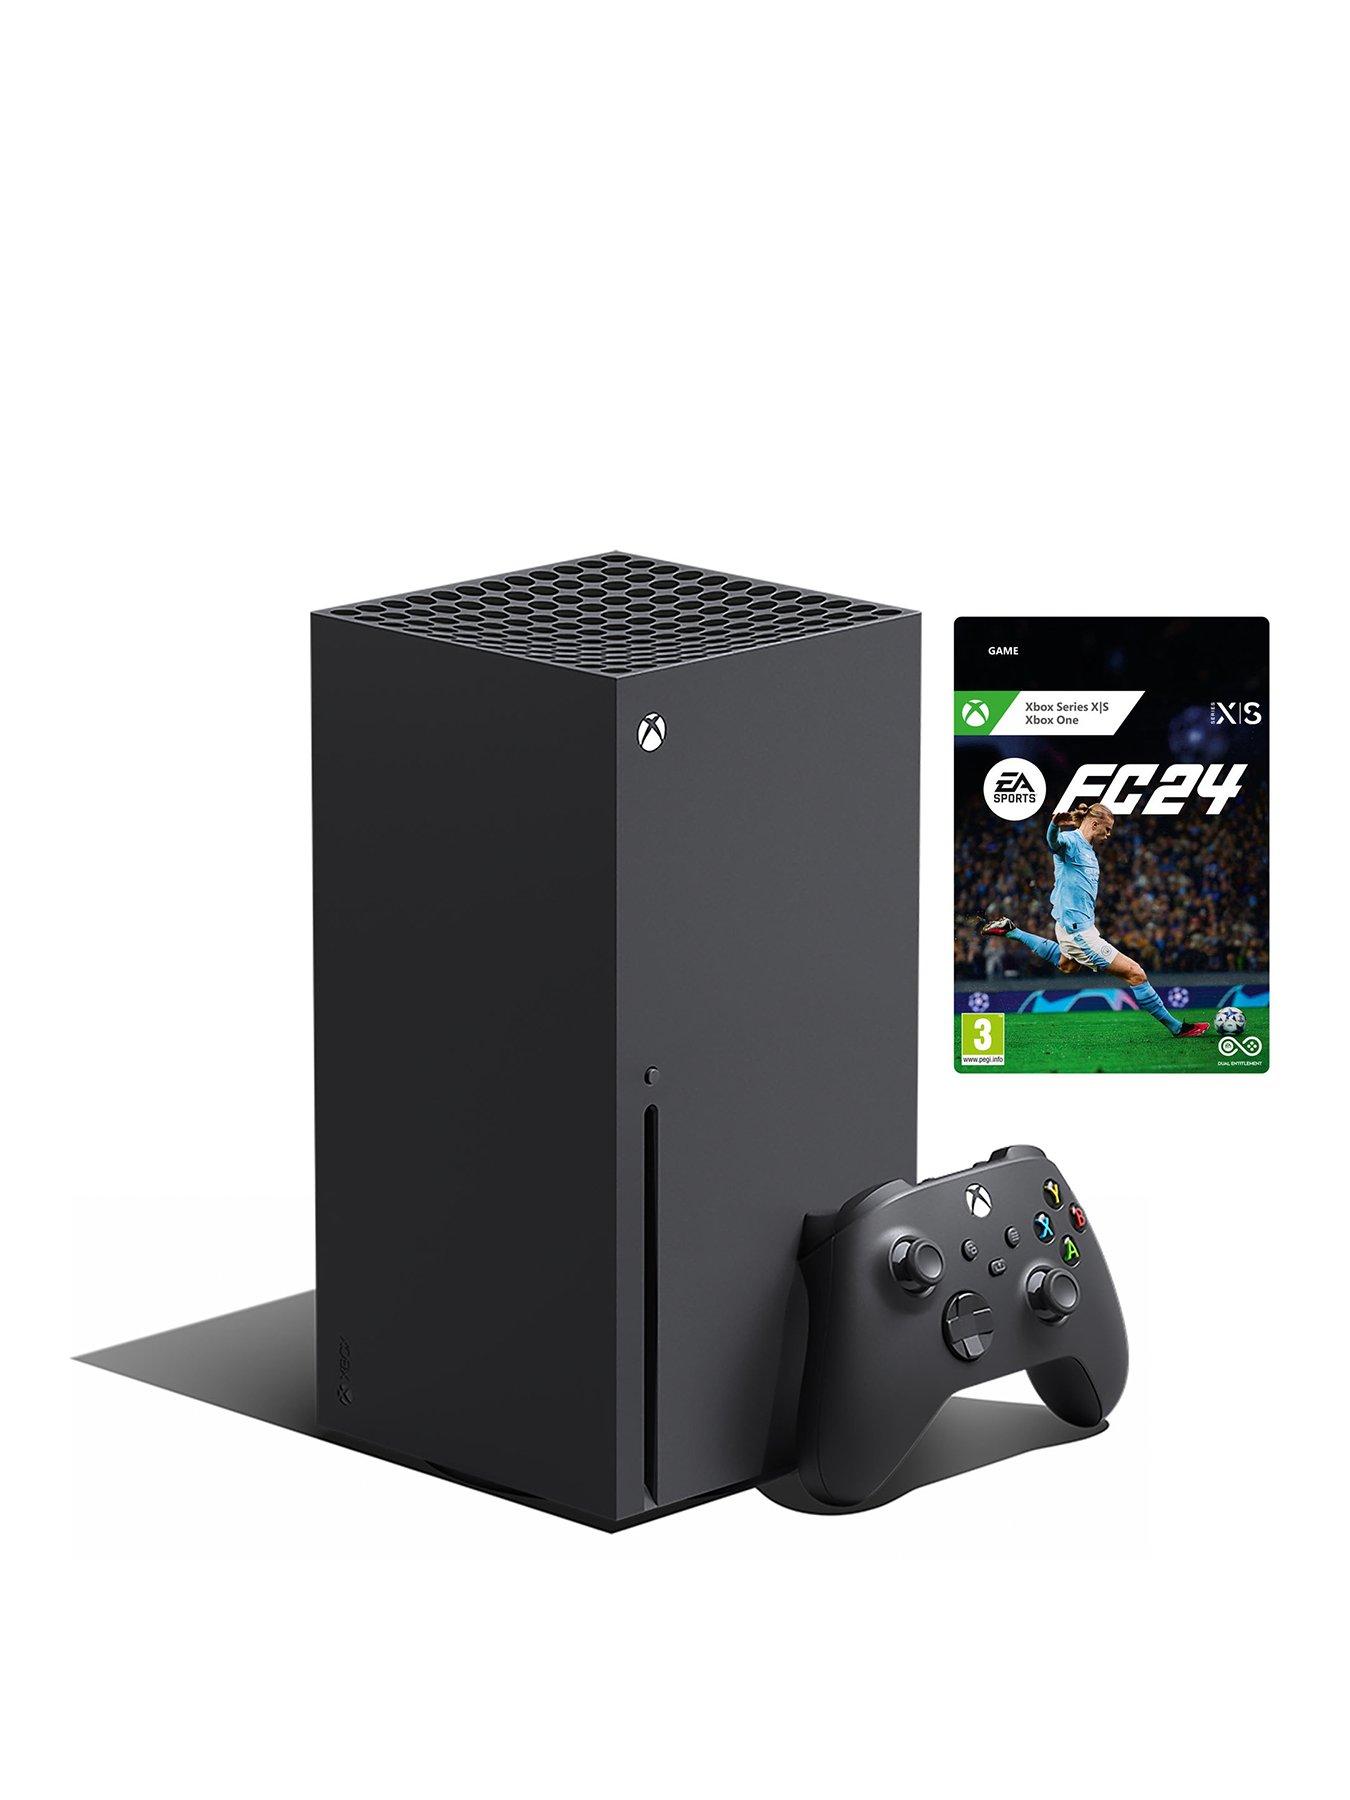 Xbox One S X Consoles 500GB 1TB Bundle Set + Game New Forza 7 Star Wars